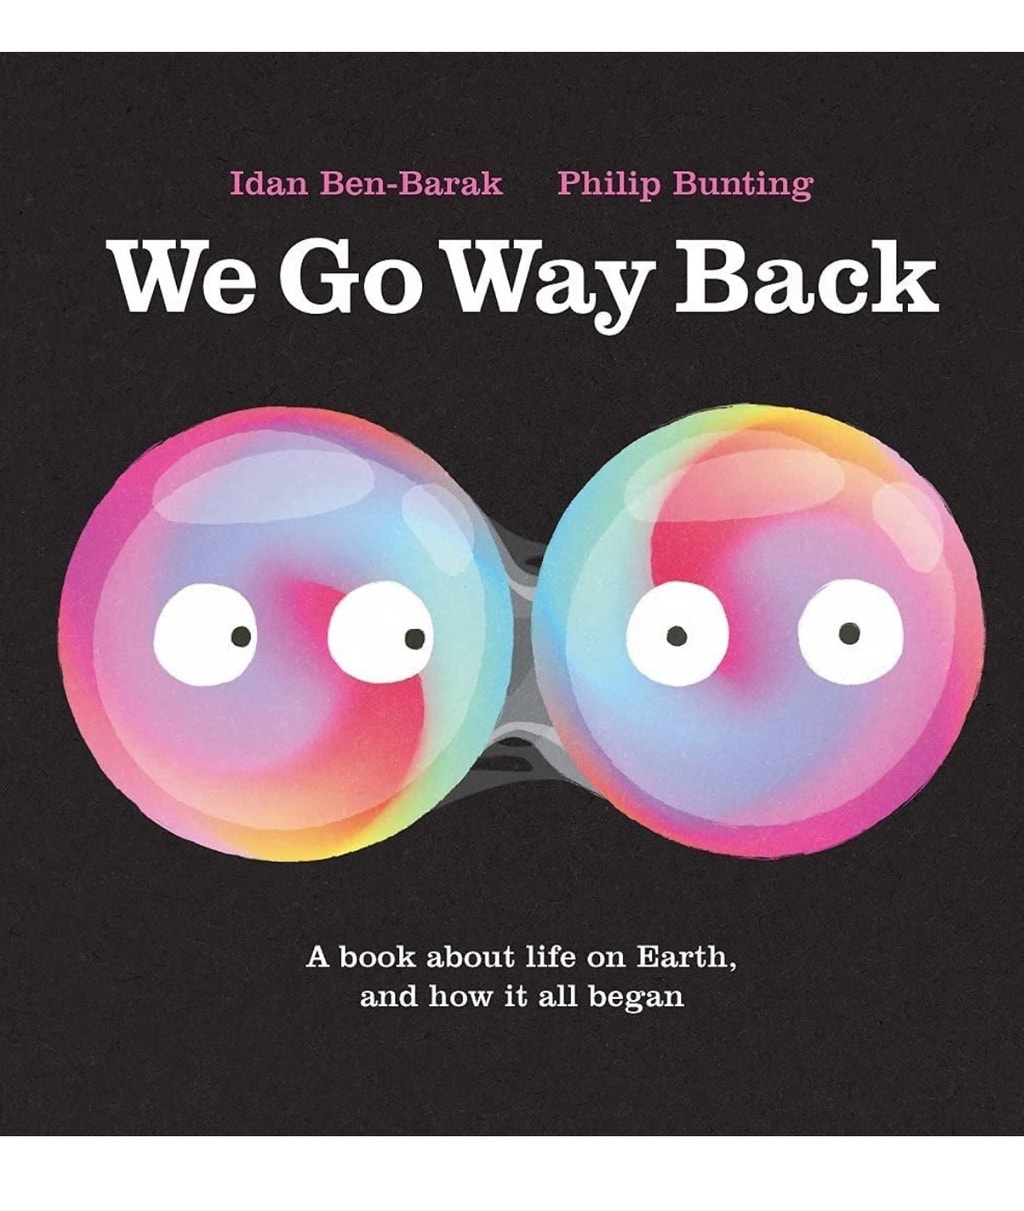 We Go Way Back  - Idan Ben-Barak (author), Philip Bunting (illustrator) Allen & Unwin (publisher)